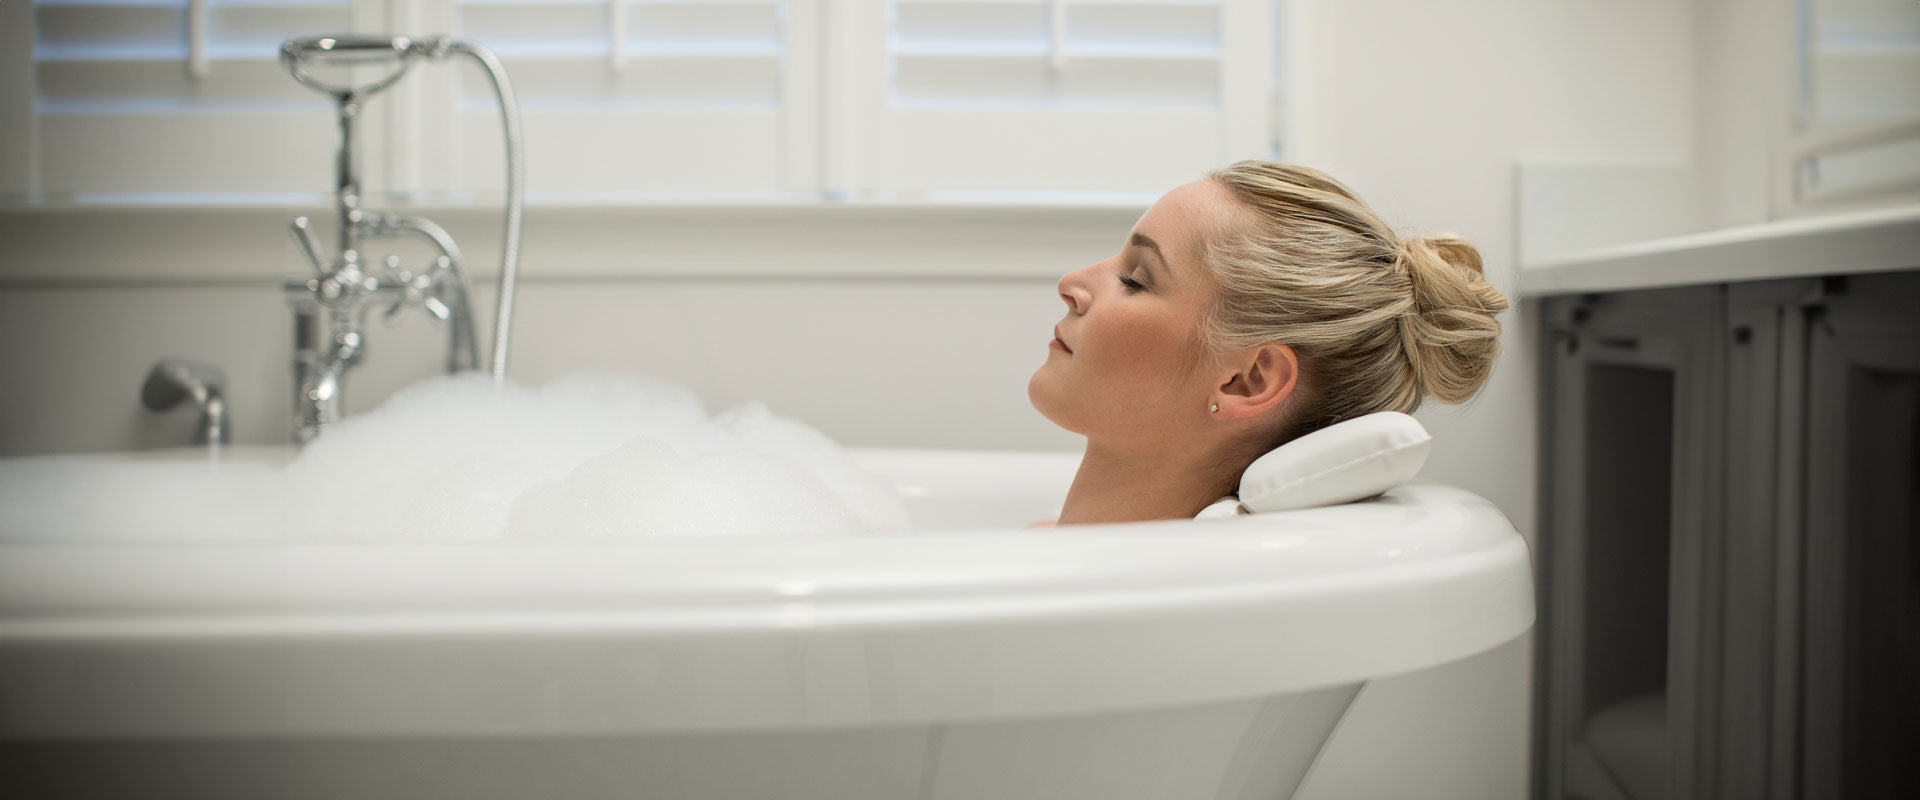 Woman relaxing in a bathtub with a Gorilla Grip bath pillow